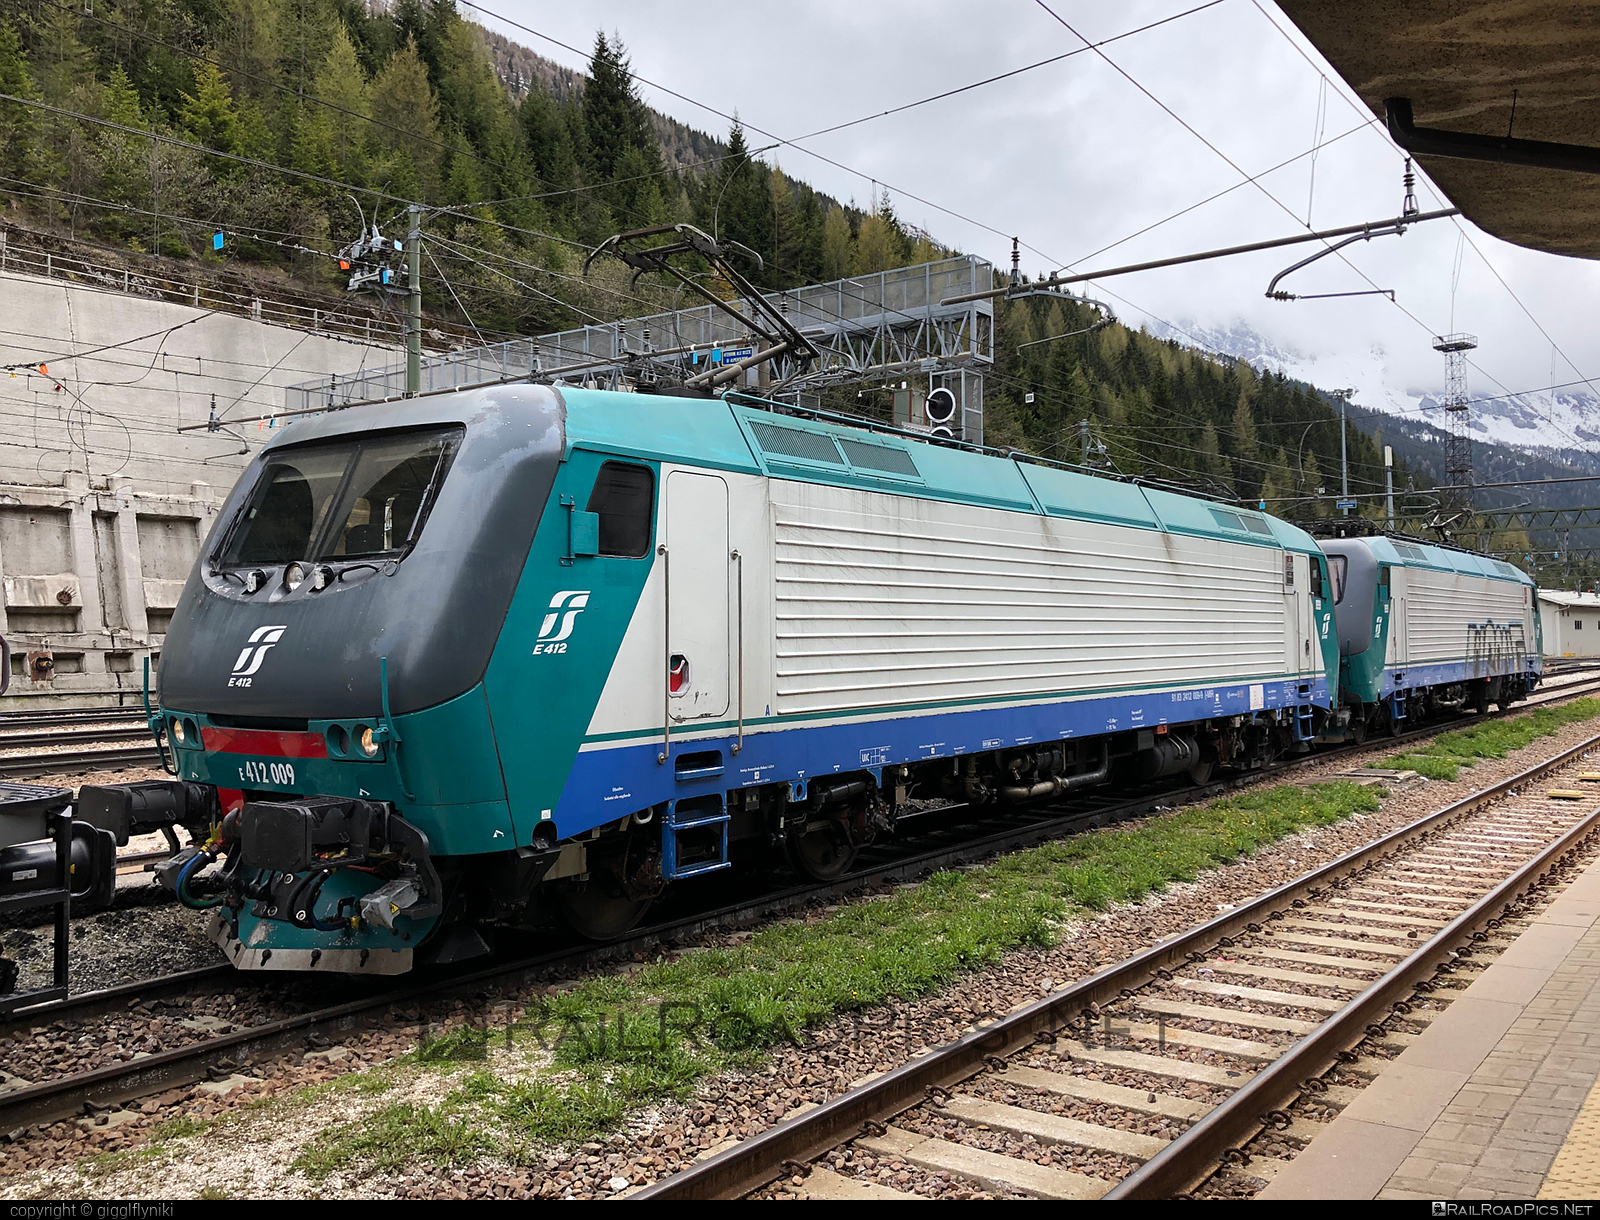 FS Class E.412 - E412 009 operated by Mercitalia Rail S.r.l. #e412 #ferroviedellostato #fs #fsClassE412 #fsitaliane #mercitalia